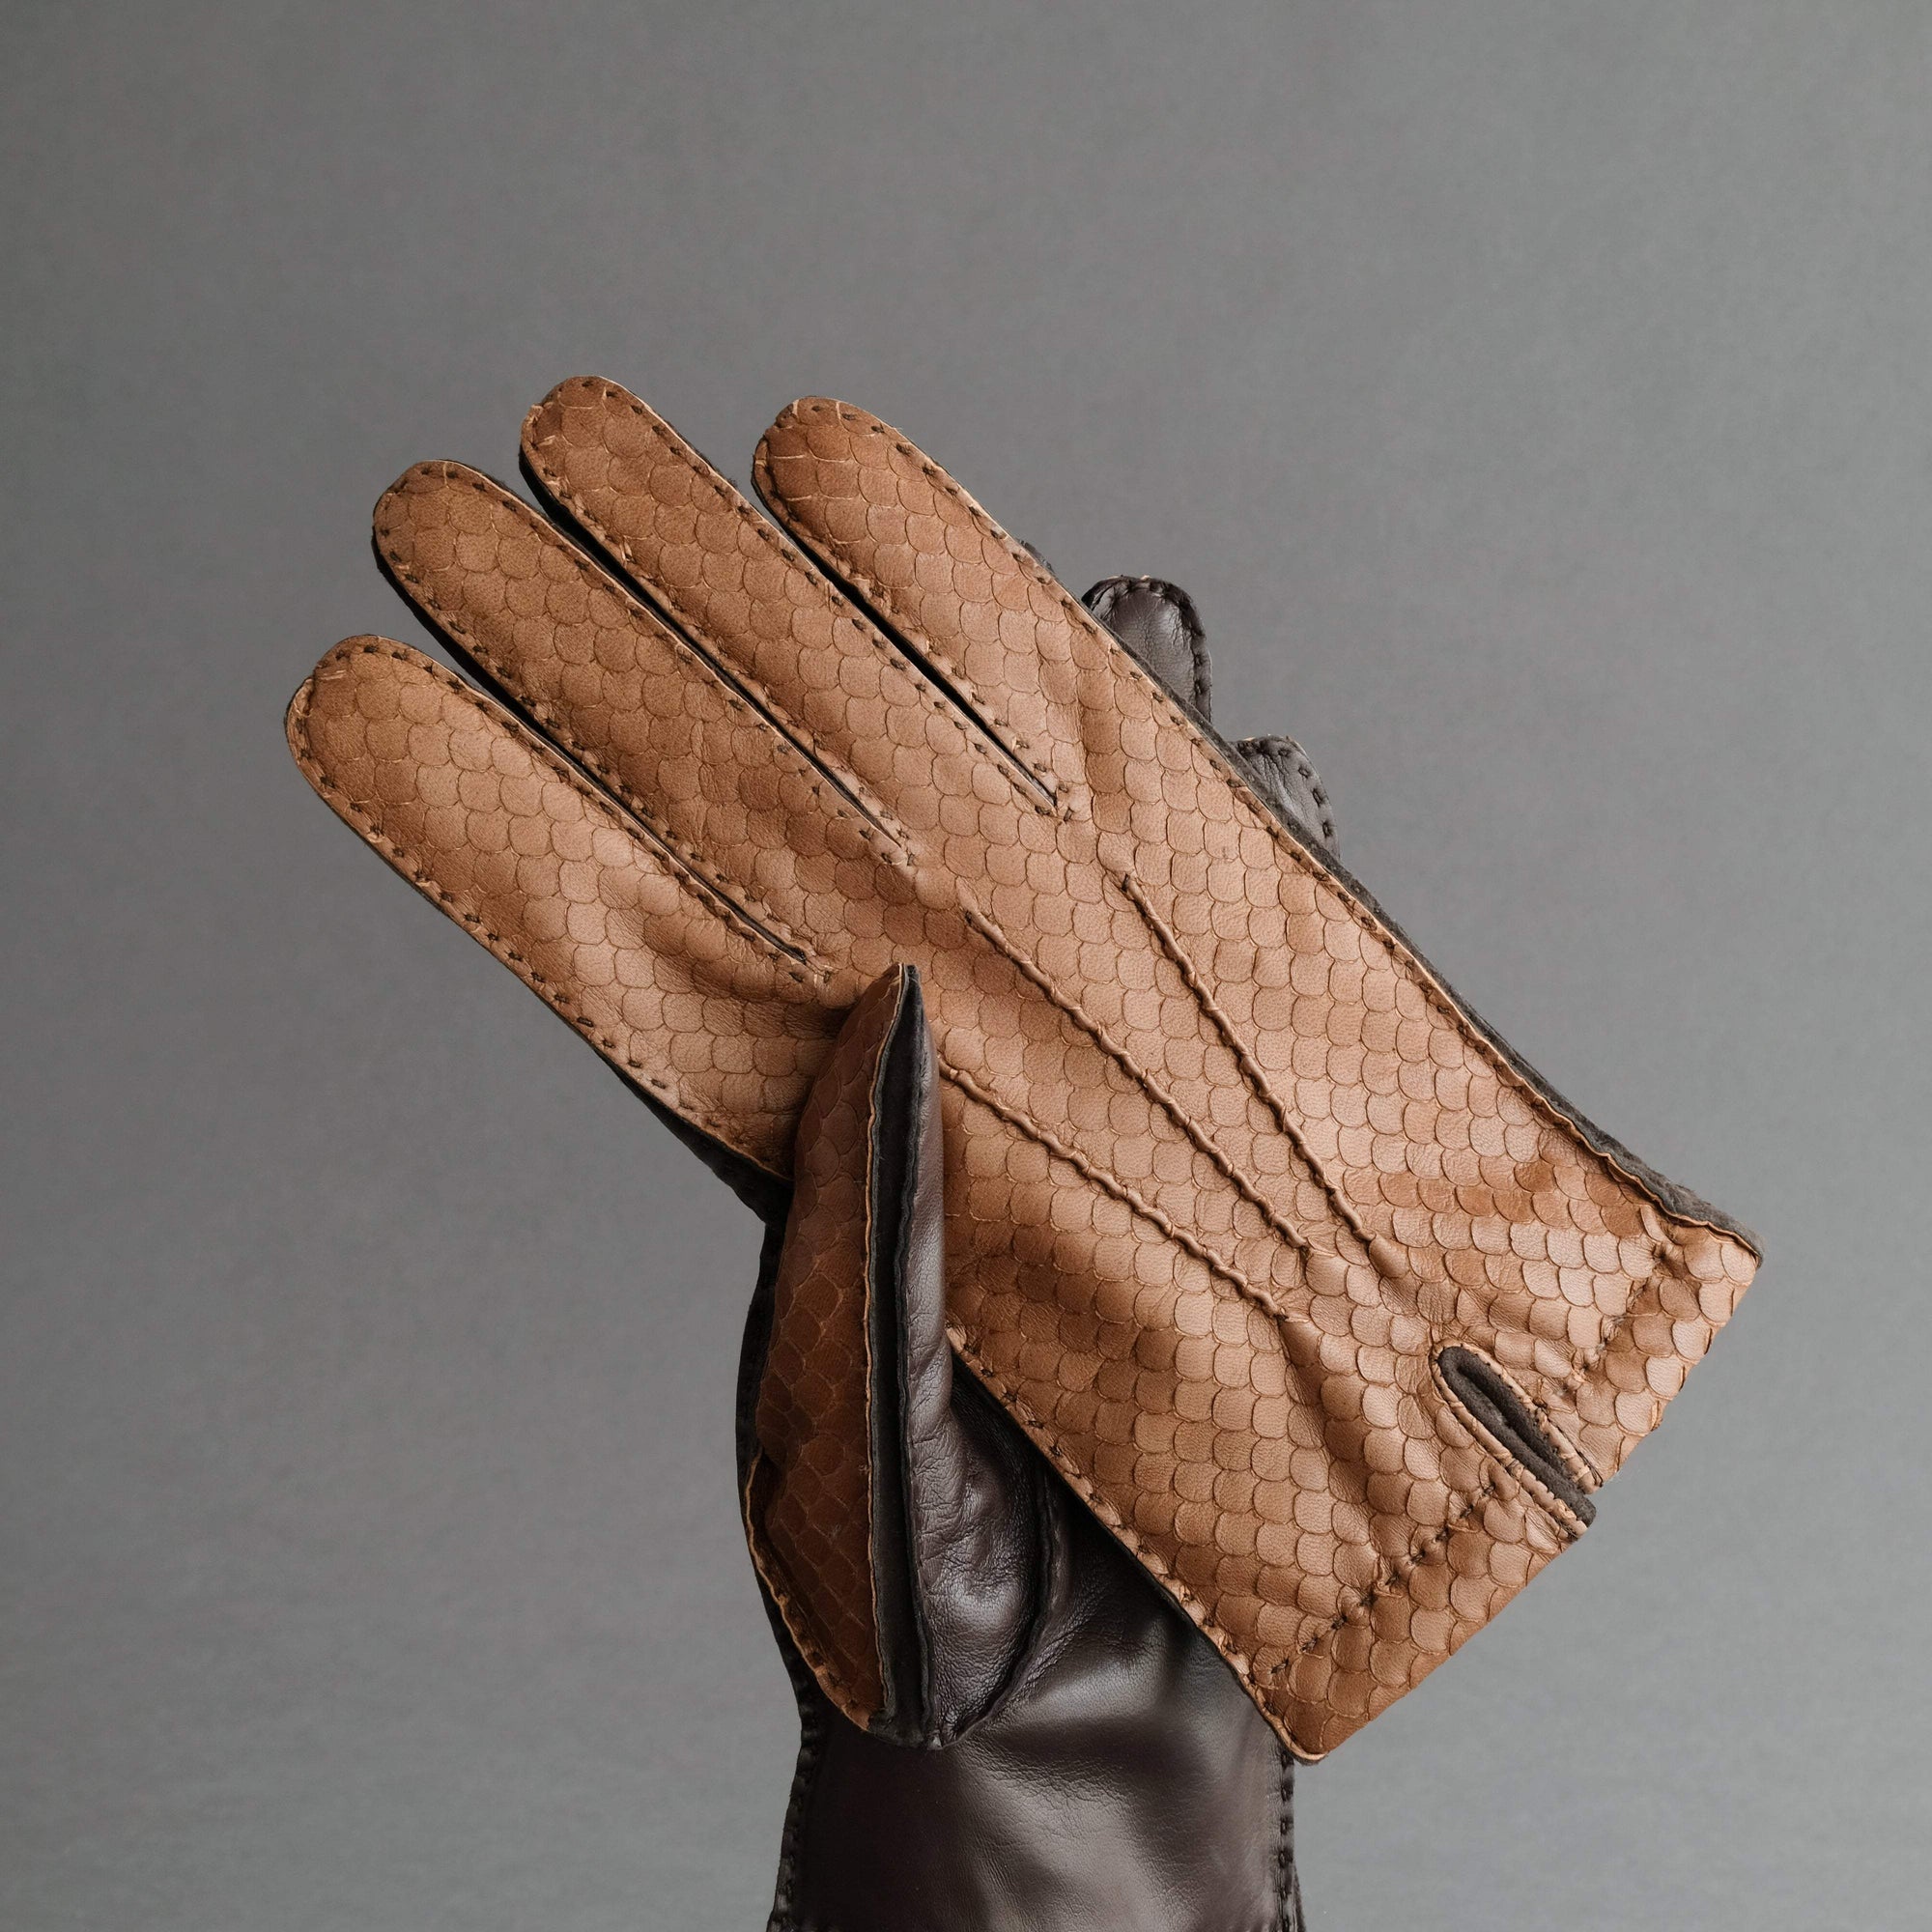 Gentlemen&#39;s Gloves from Dark Brown/Cognac Hair Sheep Nappa Lined with Cashmere - TR Handschuhe Wien - Thomas Riemer Handmade Gloves